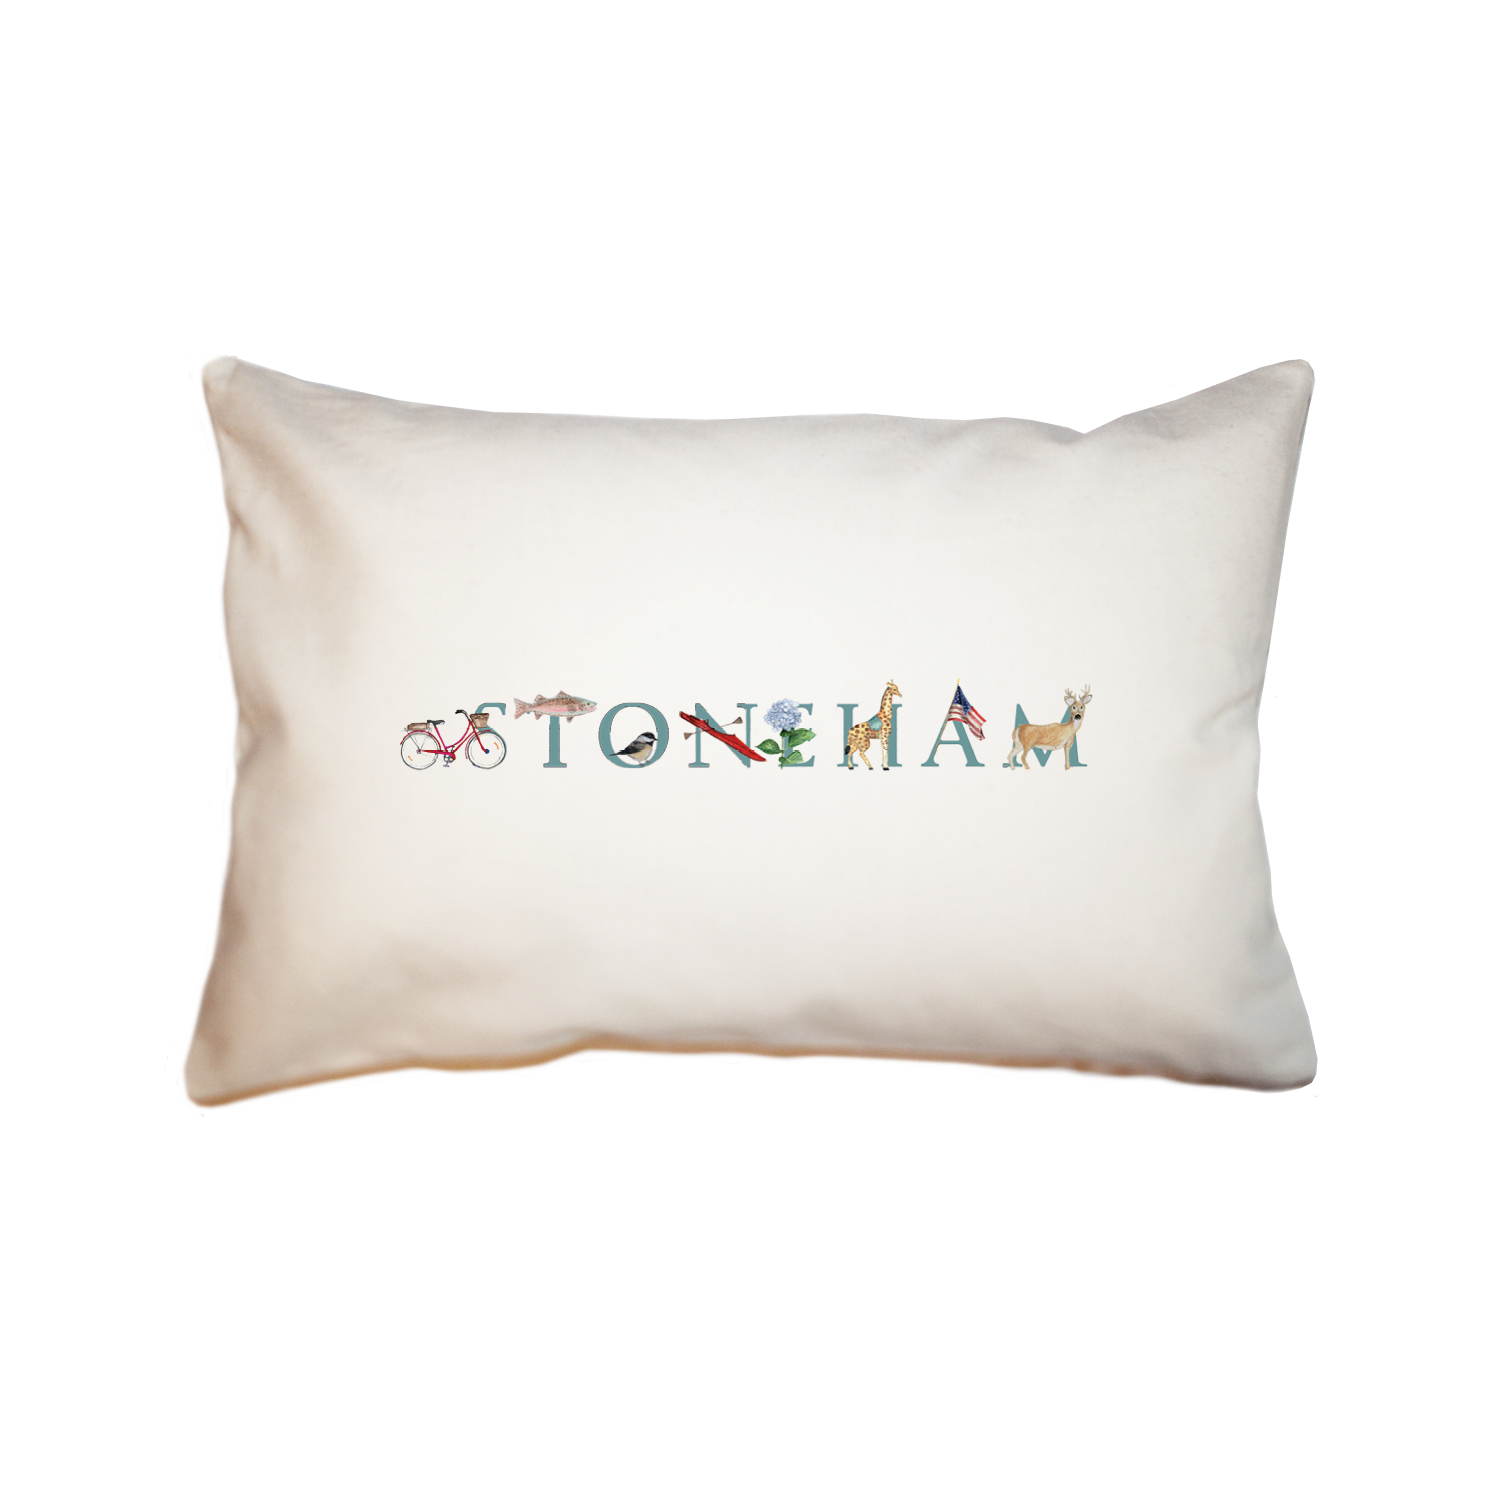 Stoneham large rectangle pillow